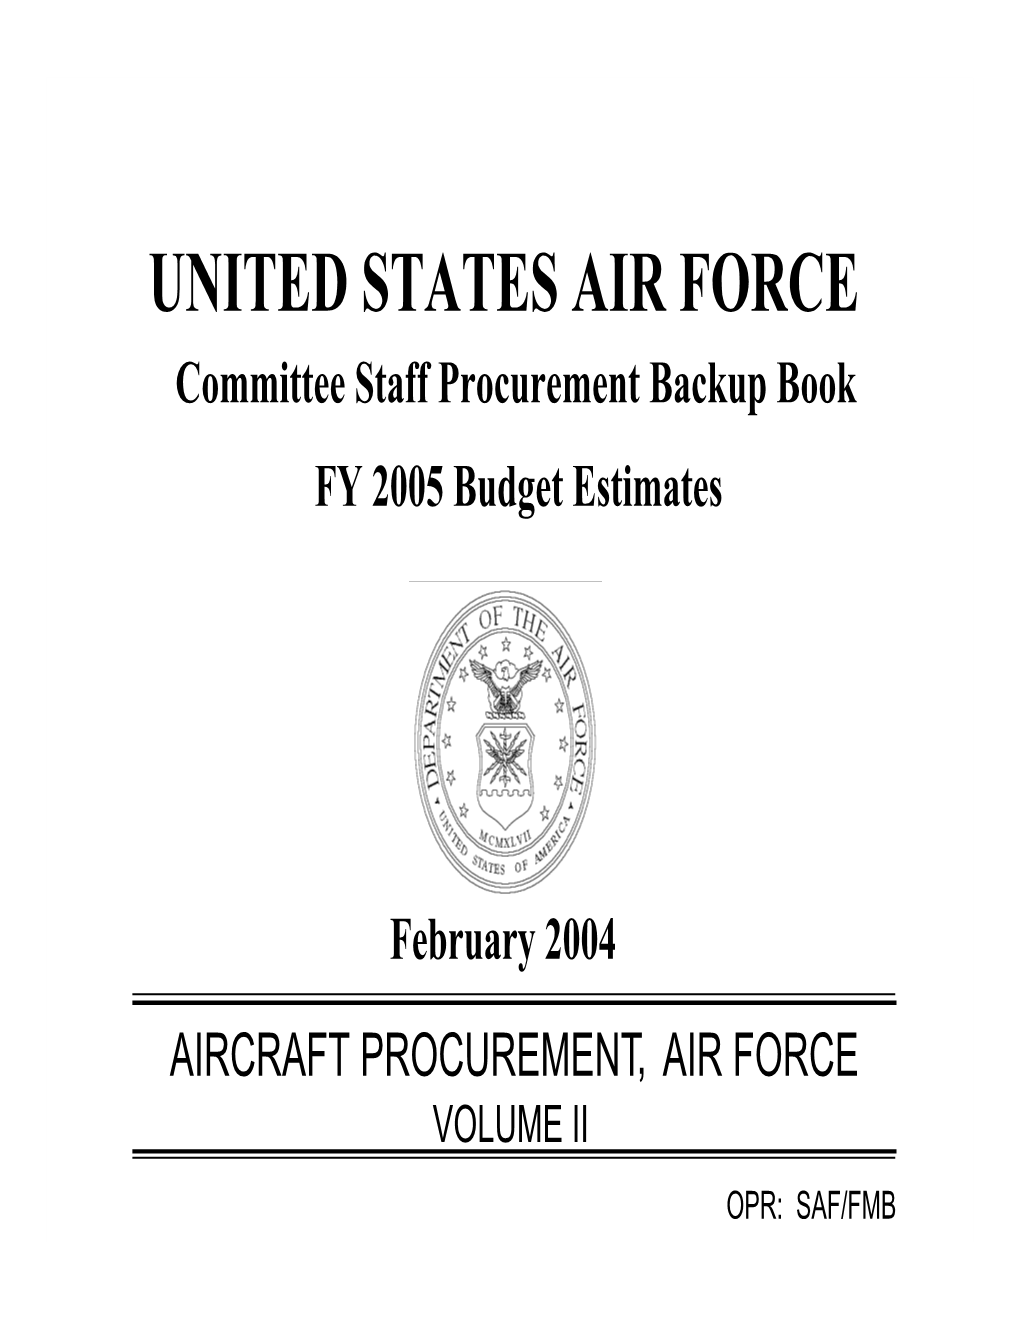 Aircraft Procurement Volume II, Part 1